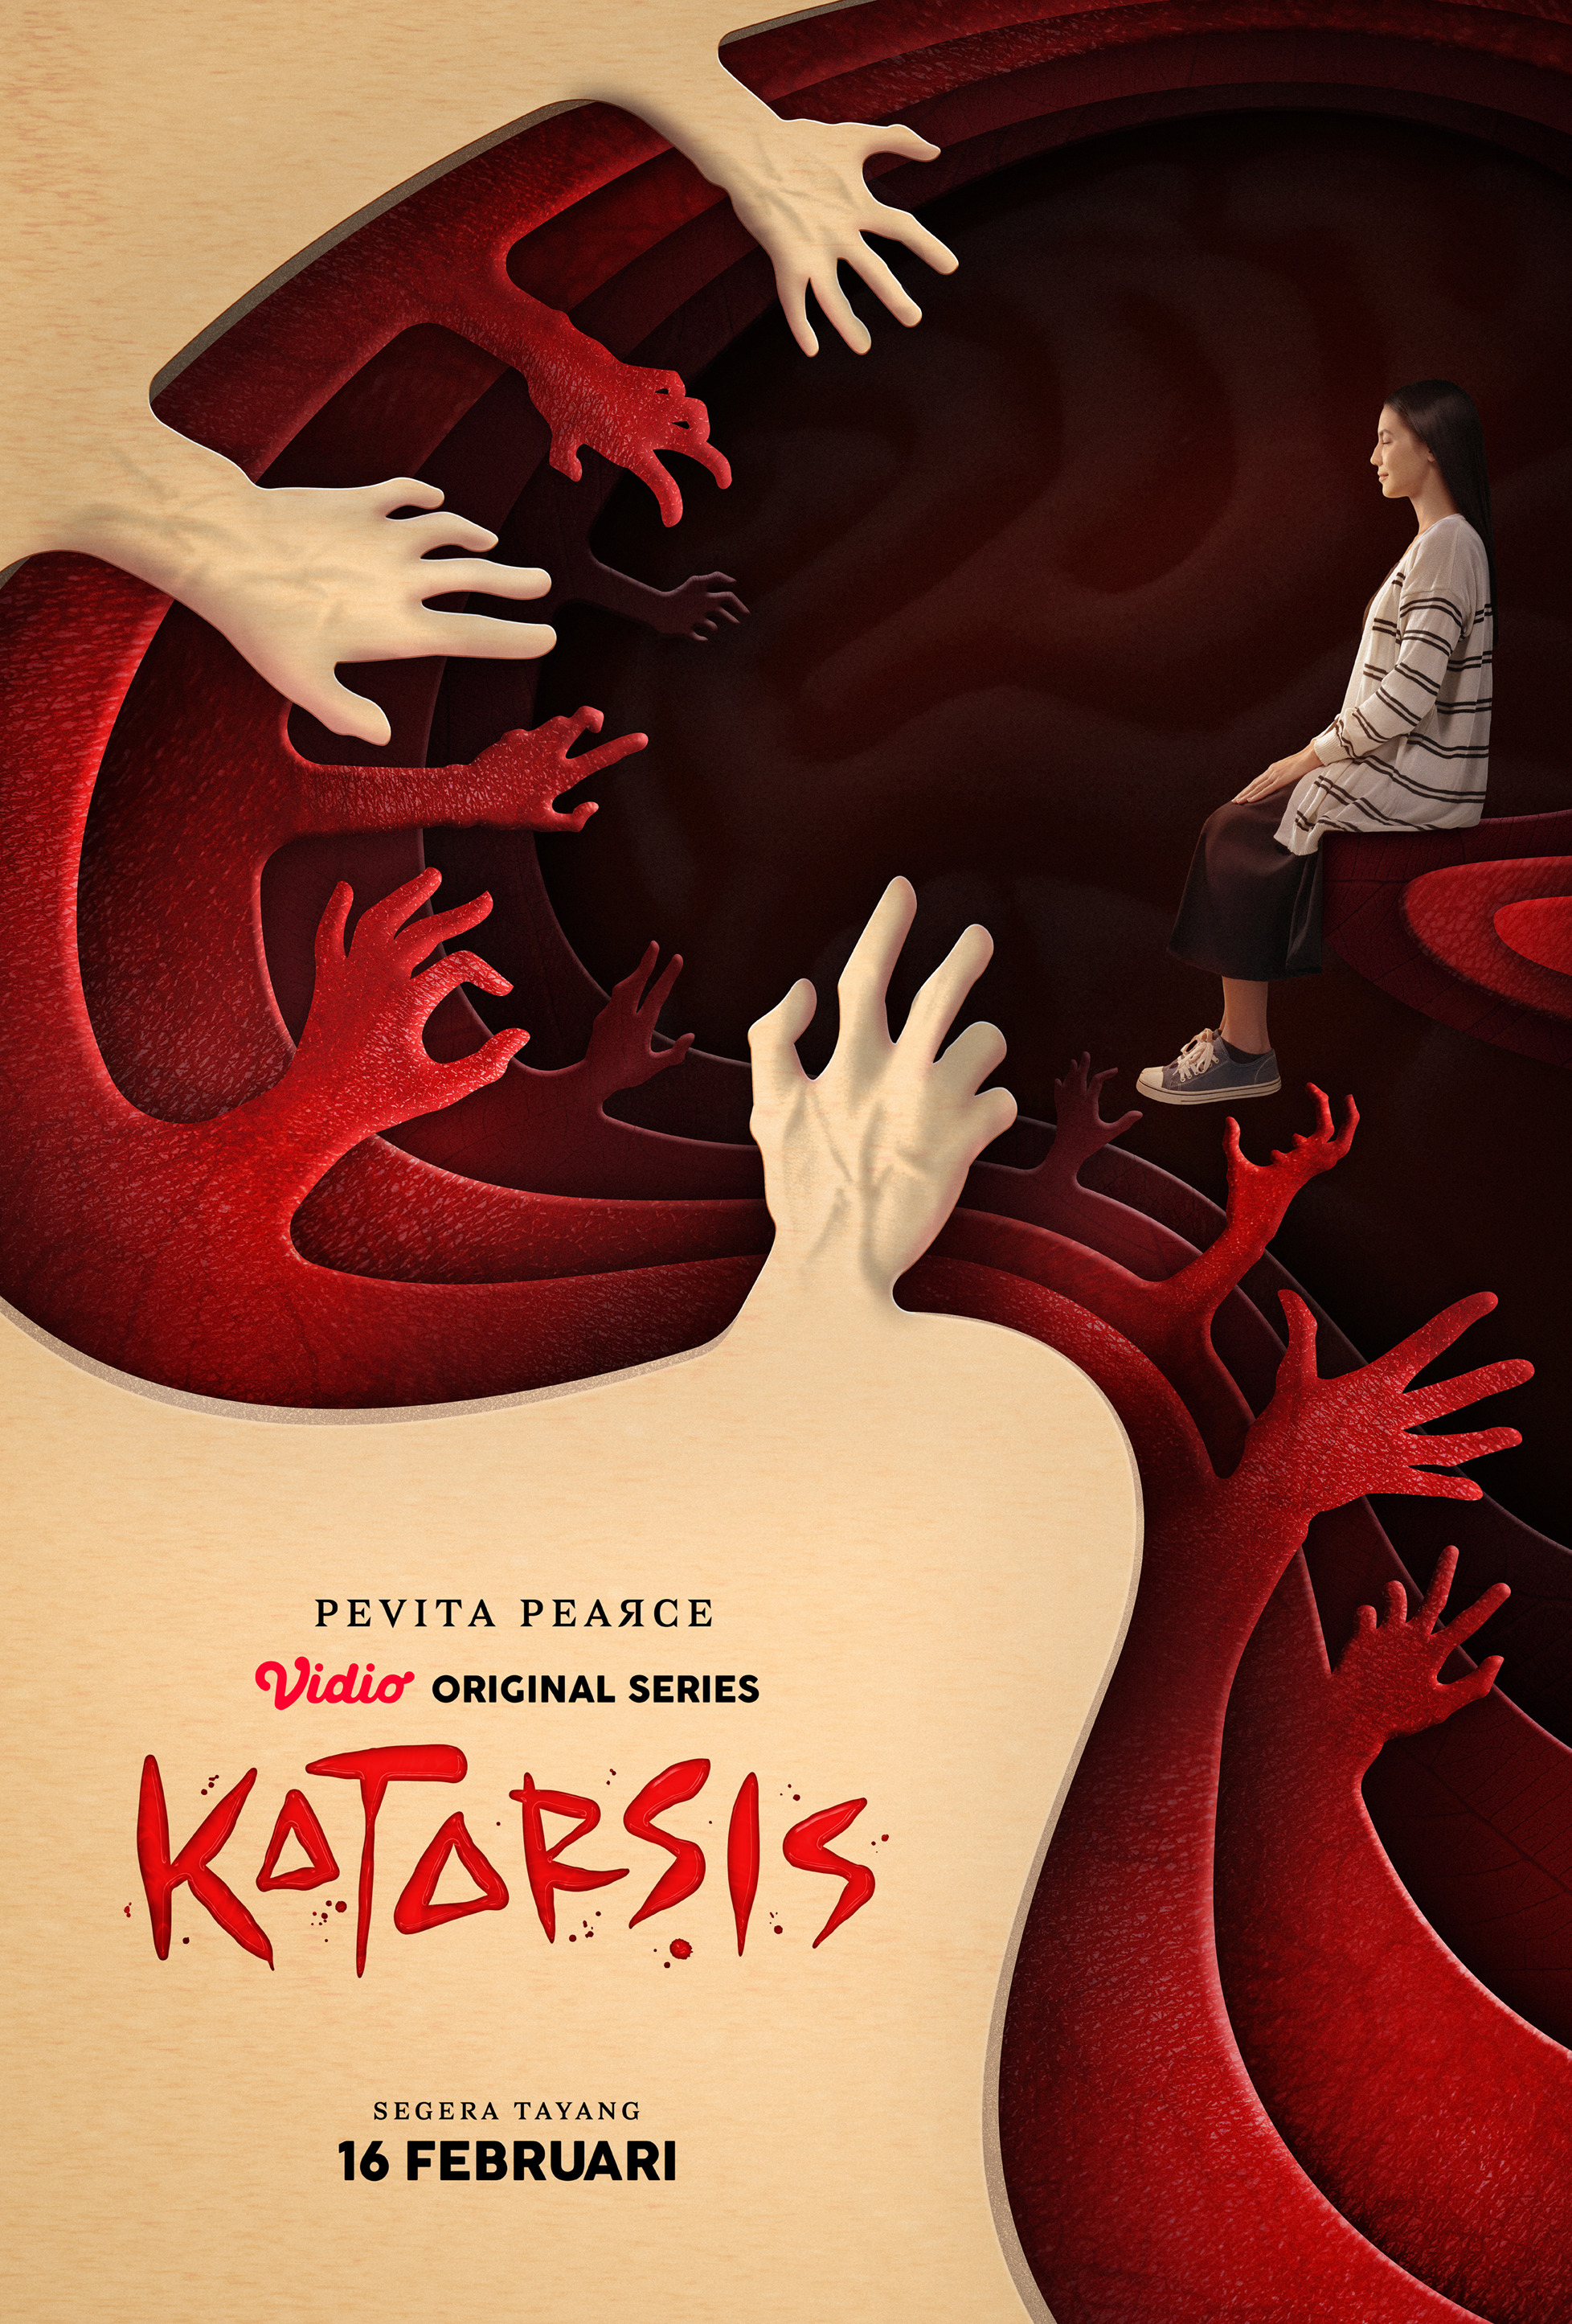 Mega Sized TV Poster Image for Katarsis 